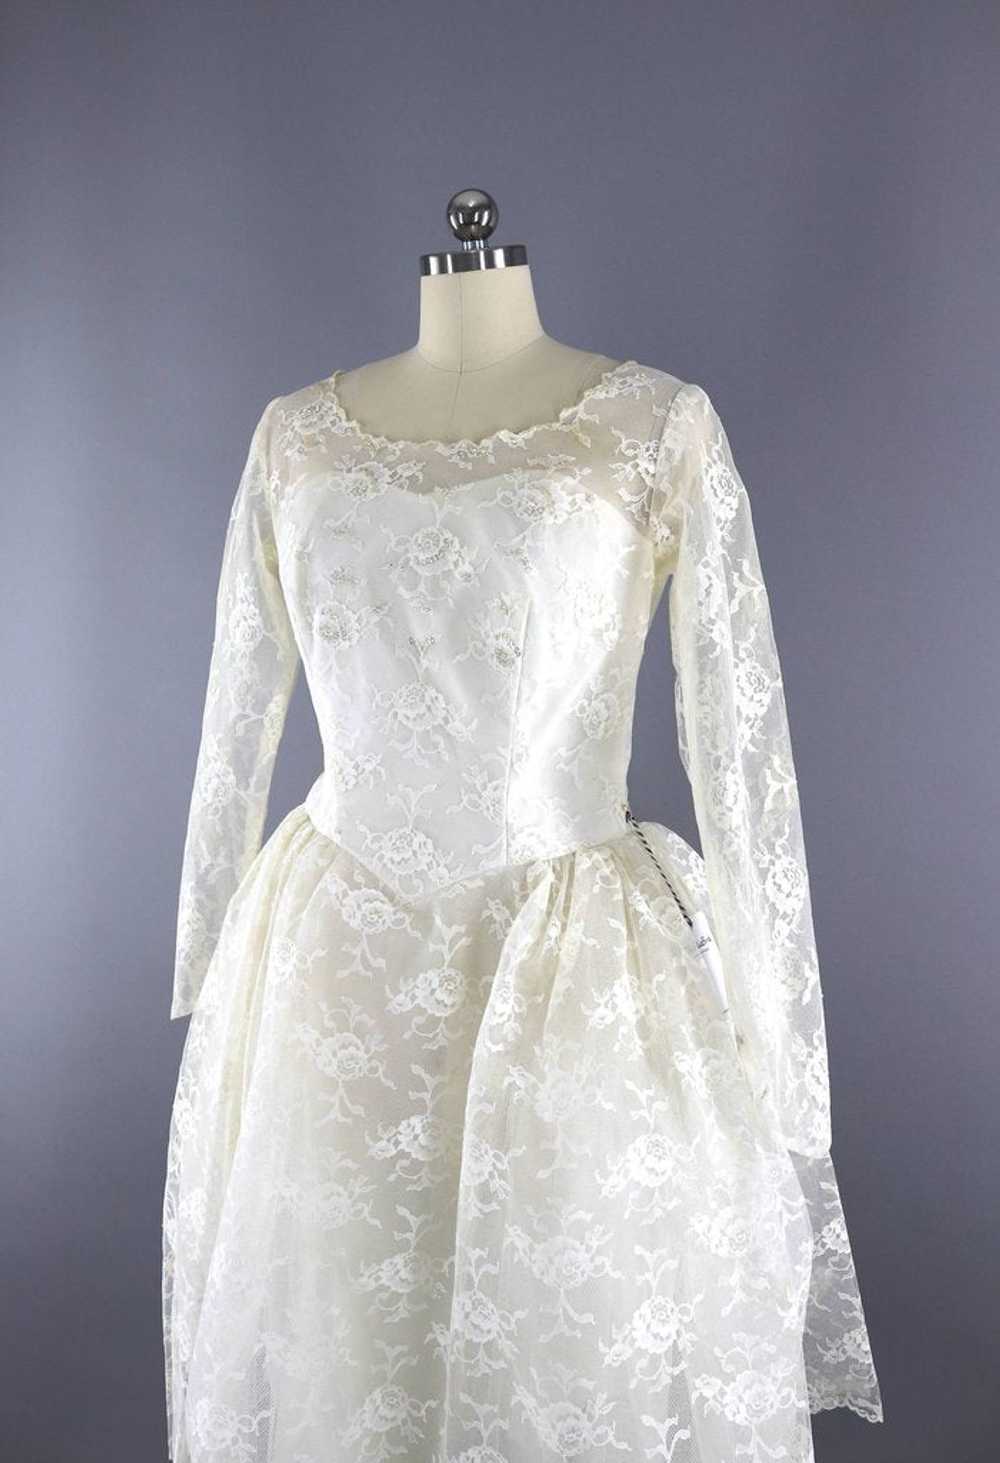 Vintage 1950s Lace Wedding Dress - image 2